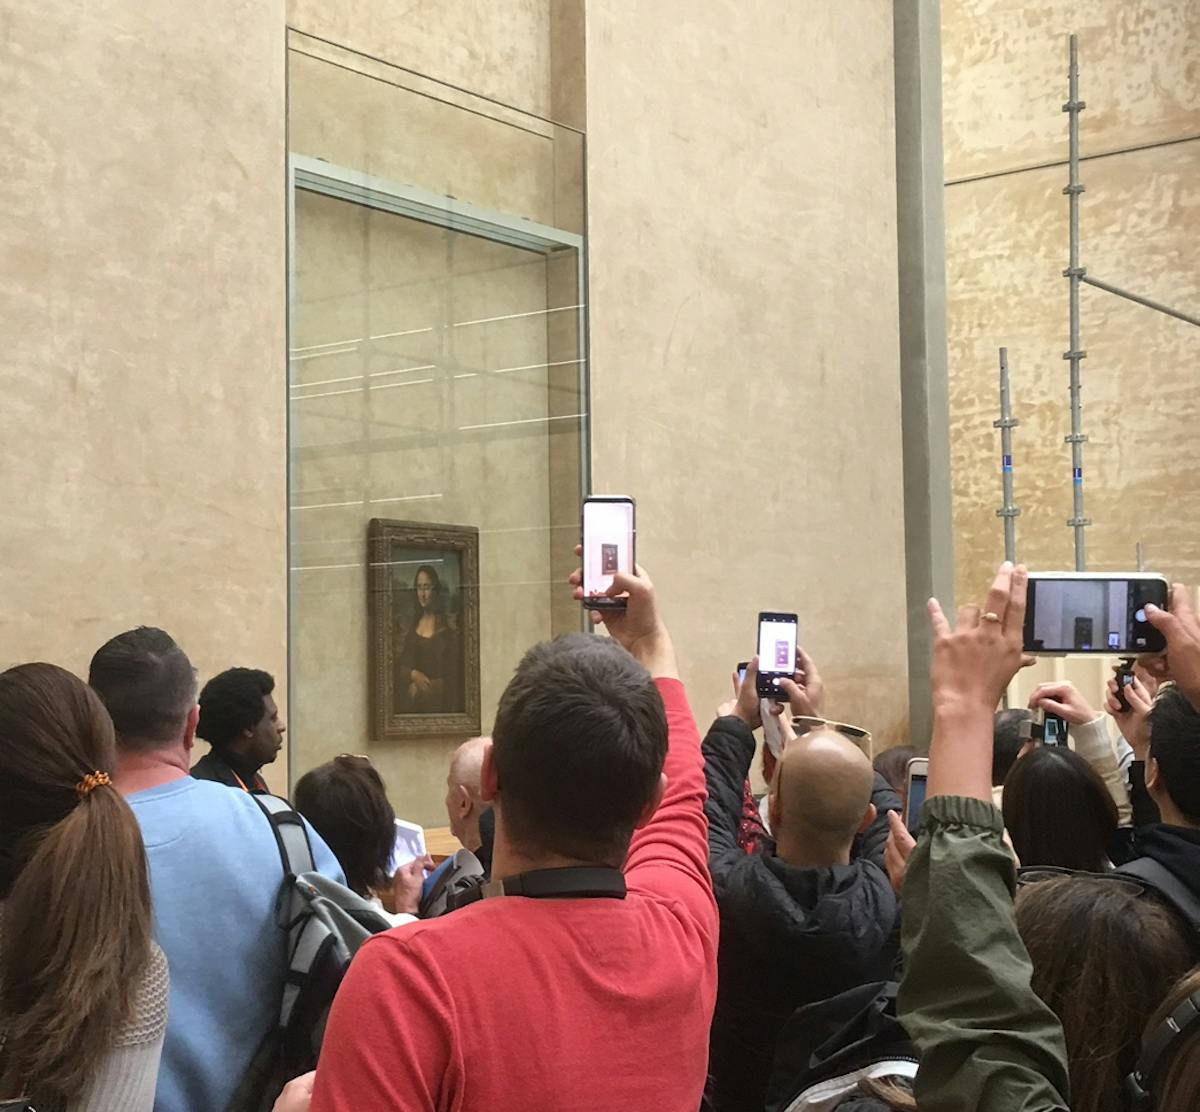 So Is 'Mona Lisa' Smiling? A New Study Says Yes | Smart News | Smithsonian  Magazine